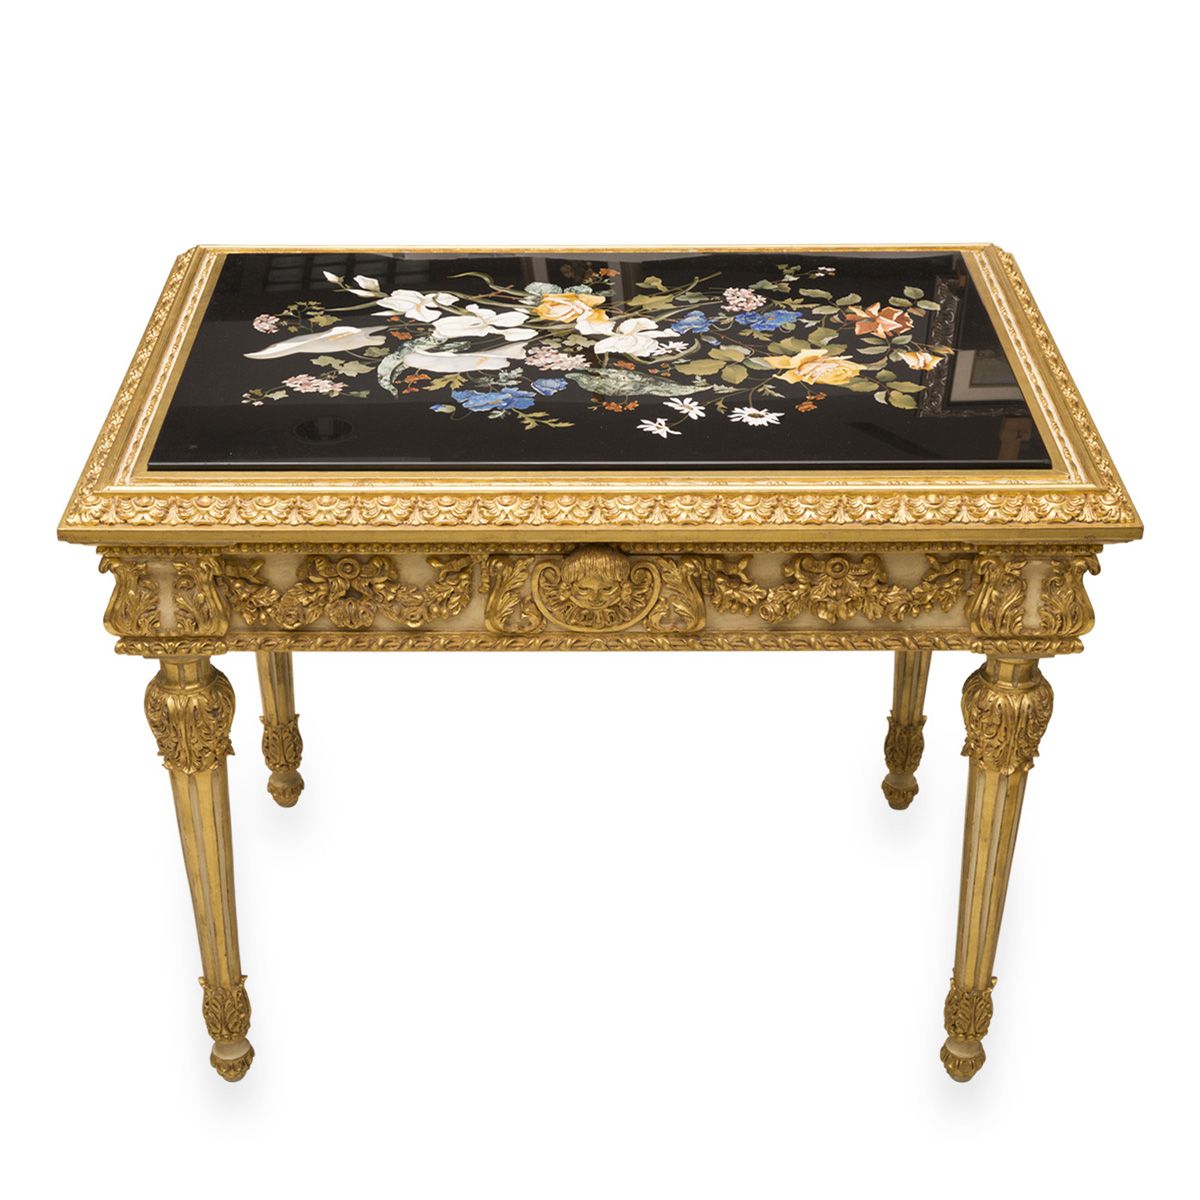 La Bellezza Mosaic Table, by Traversari Mosaici - Available on www.artemest.com - $279,000_altview01